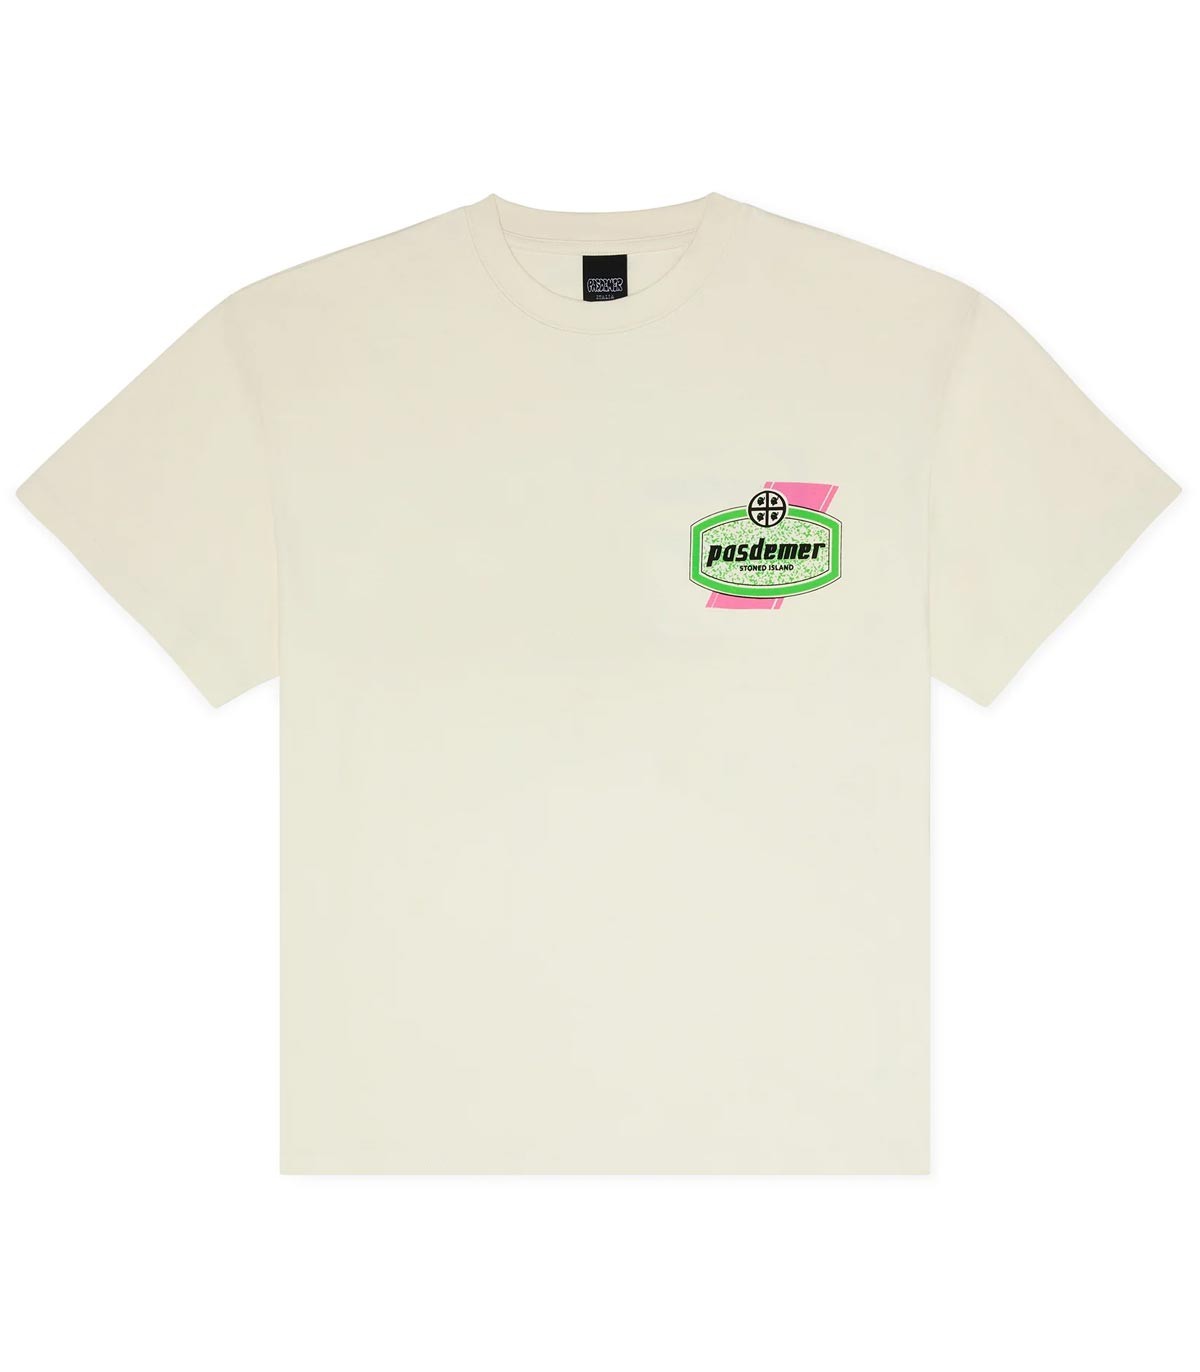 PASDEMER - Camiseta Stoned Island - Beige